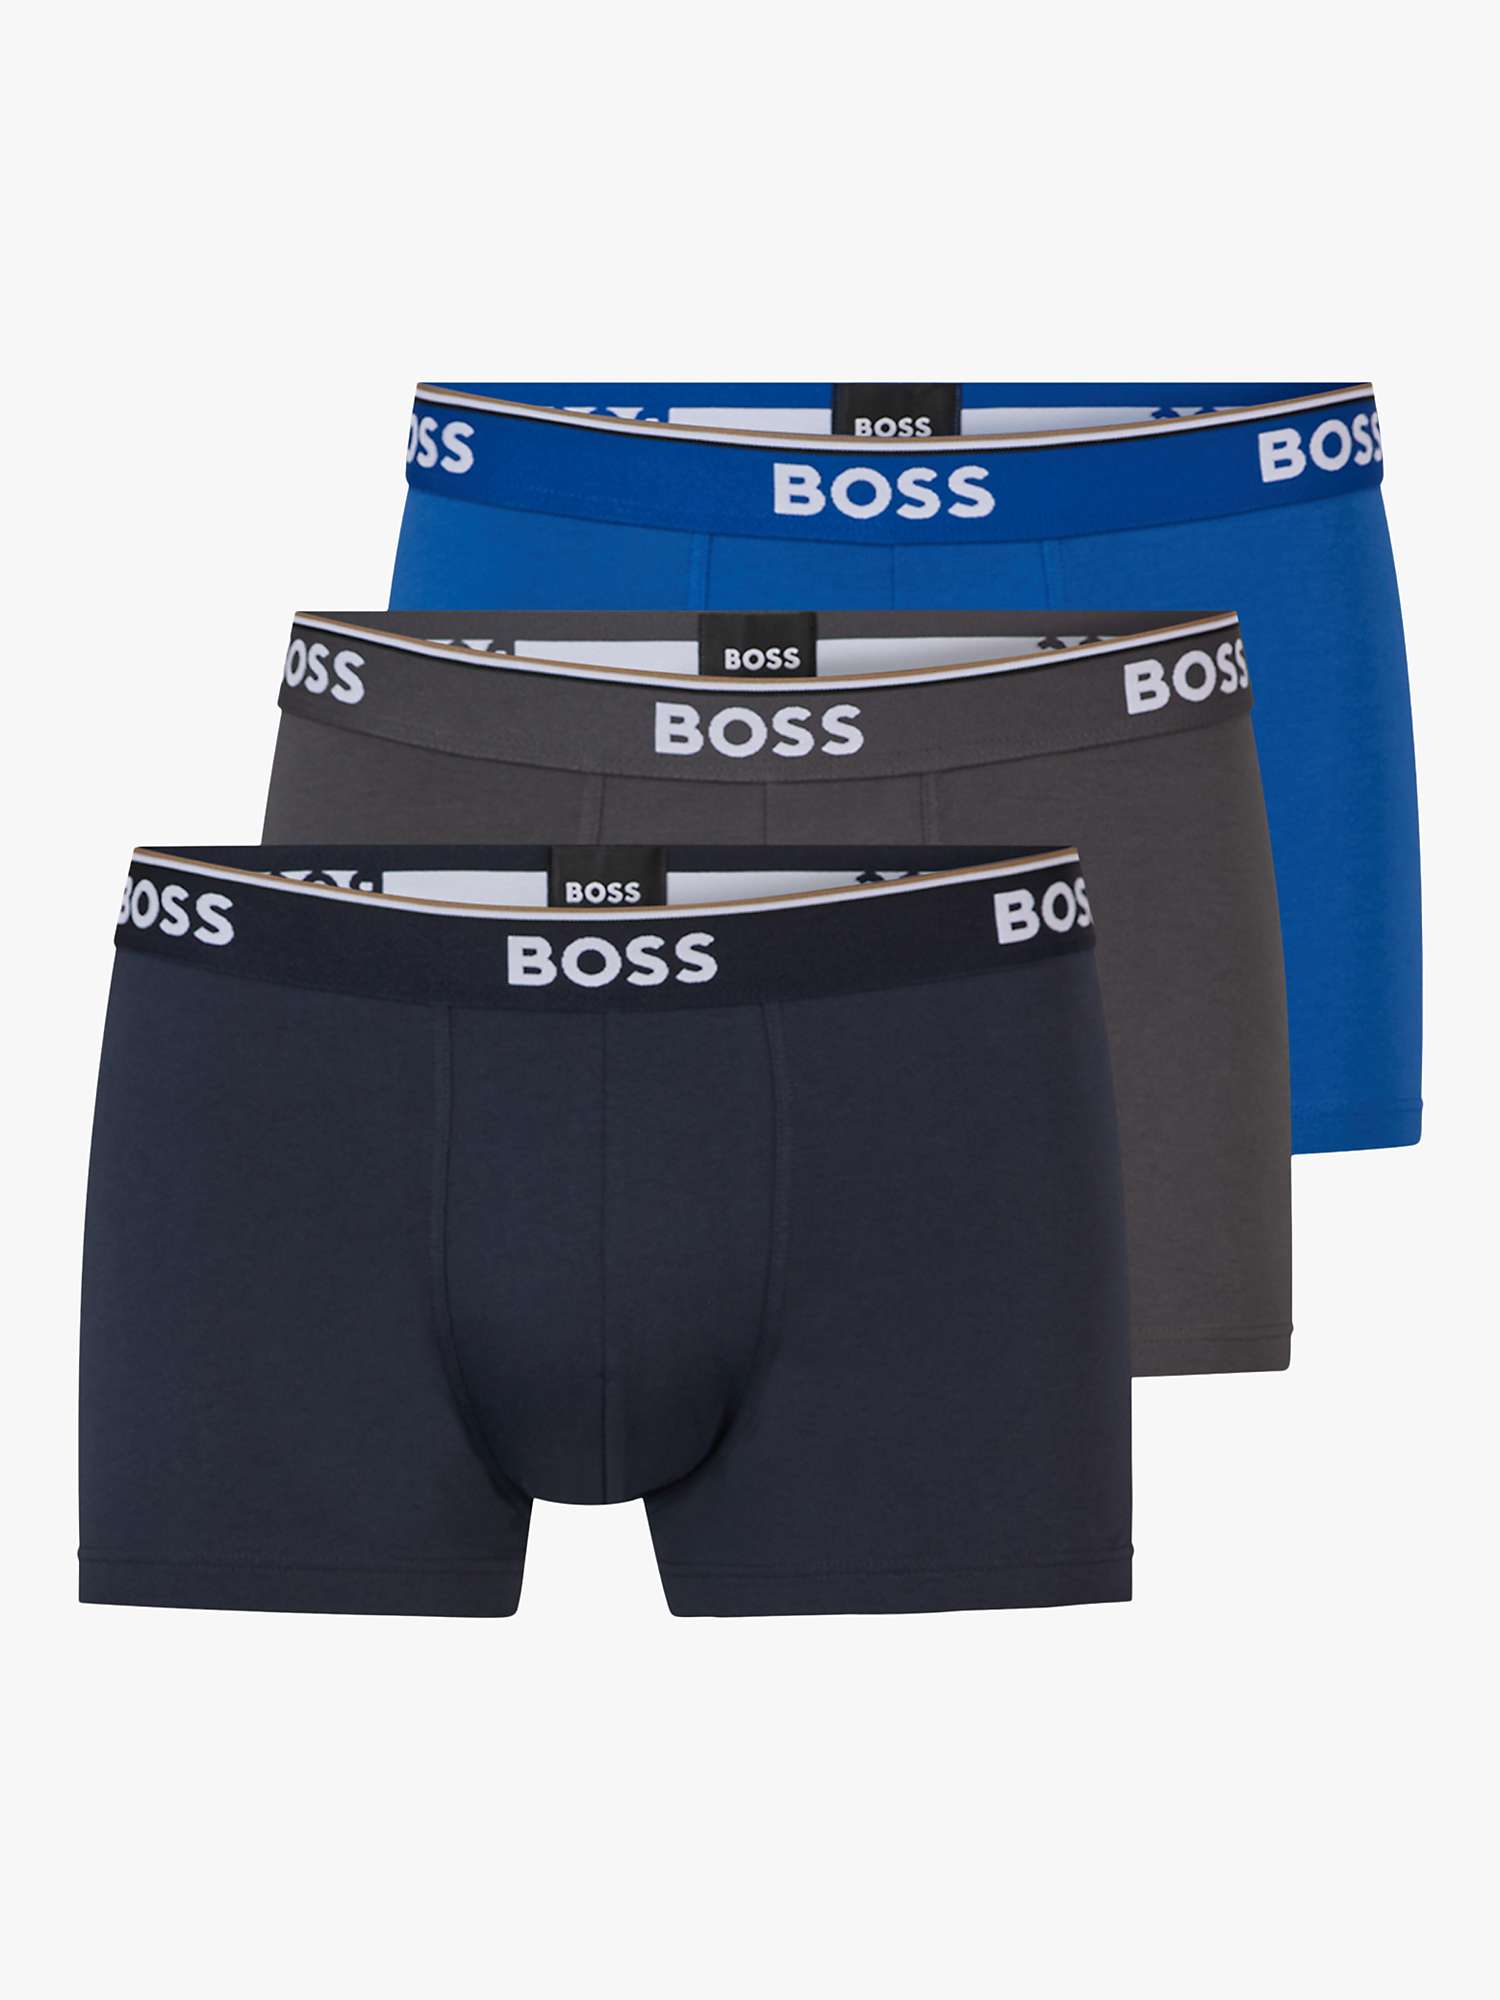 Buy BOSS Power Cotton Logo Waistband Trunks, Pack of 3, Open Blue Online at johnlewis.com